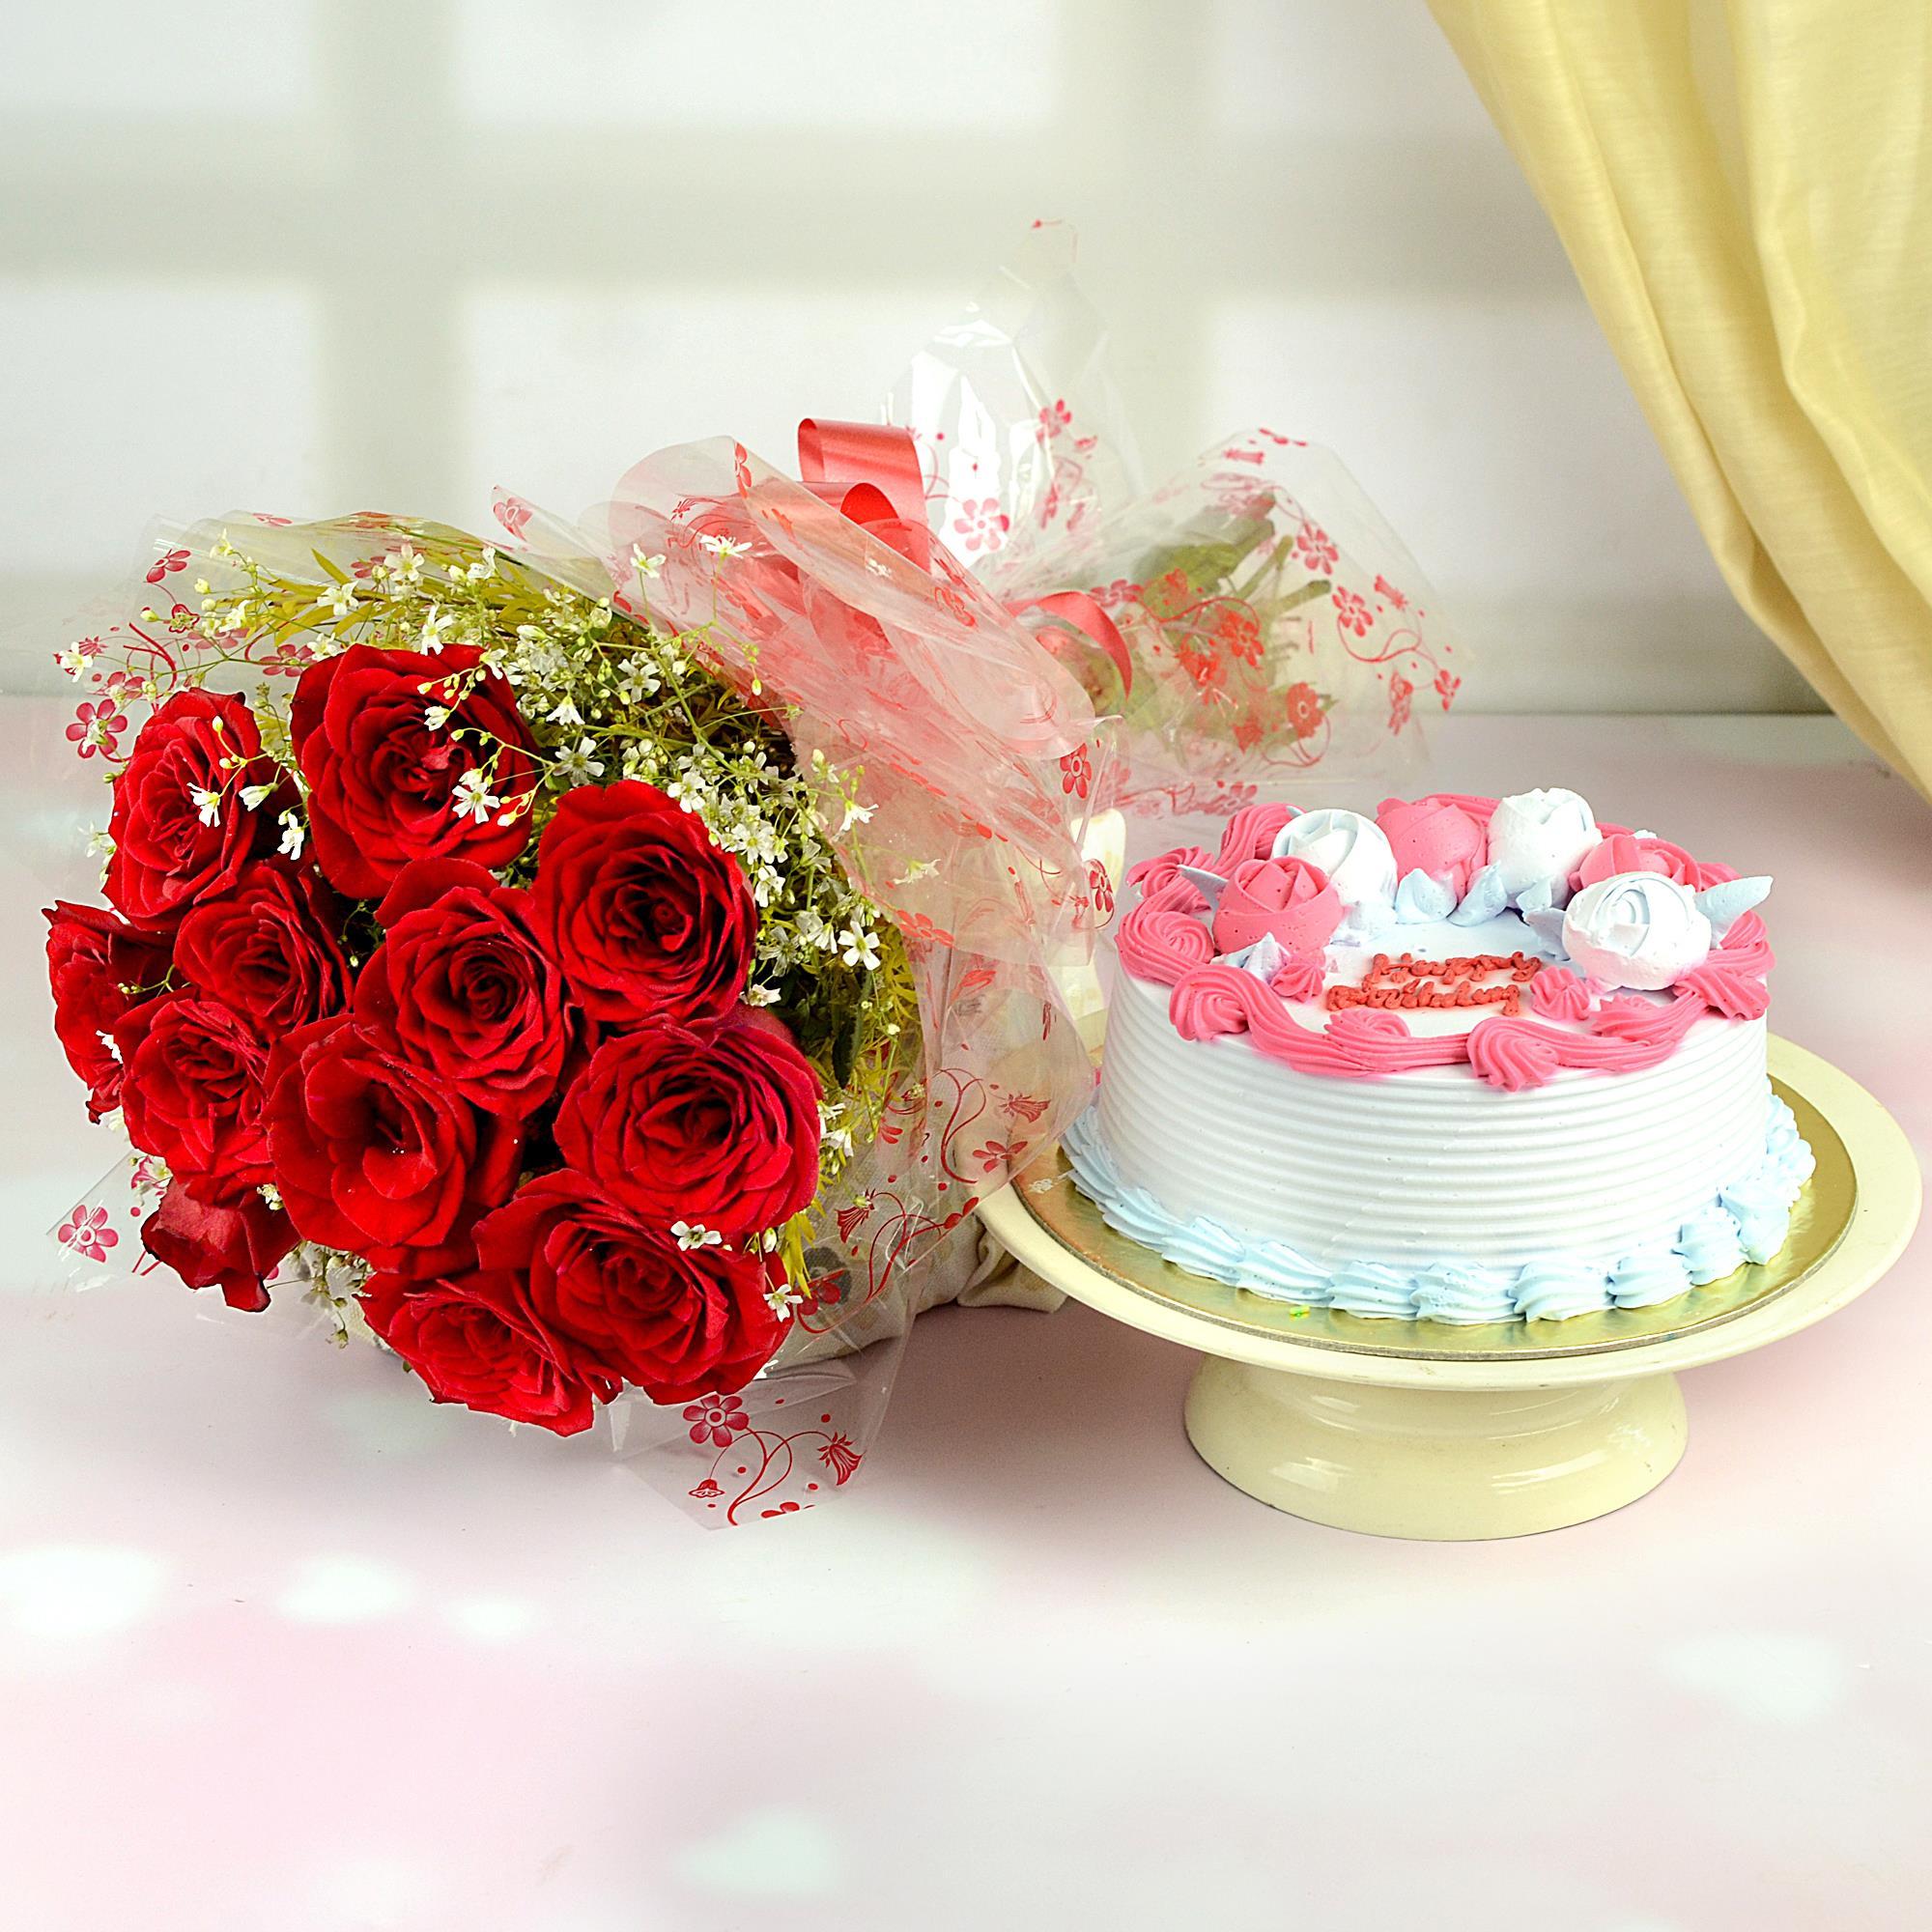 Bride To Be Cake With Real Rose Petals | bakehoney.com